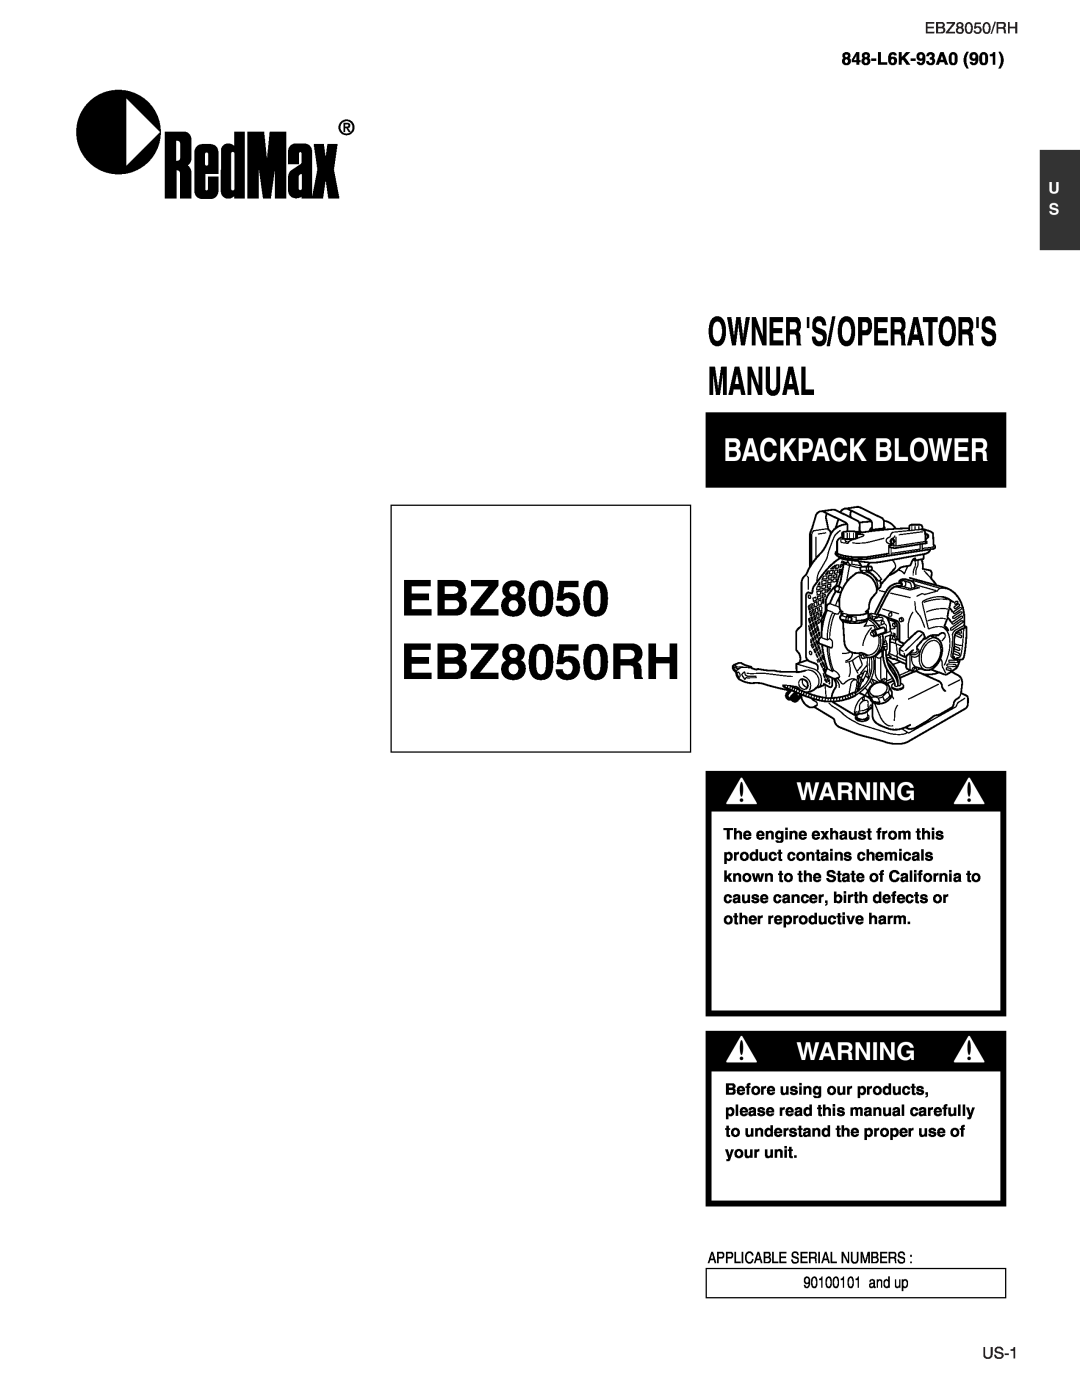 RedMax manual EBZ8050 EBZ8050RH, Manual, Backpack Blower, Owners/Operators, 848-L6K-93A0 